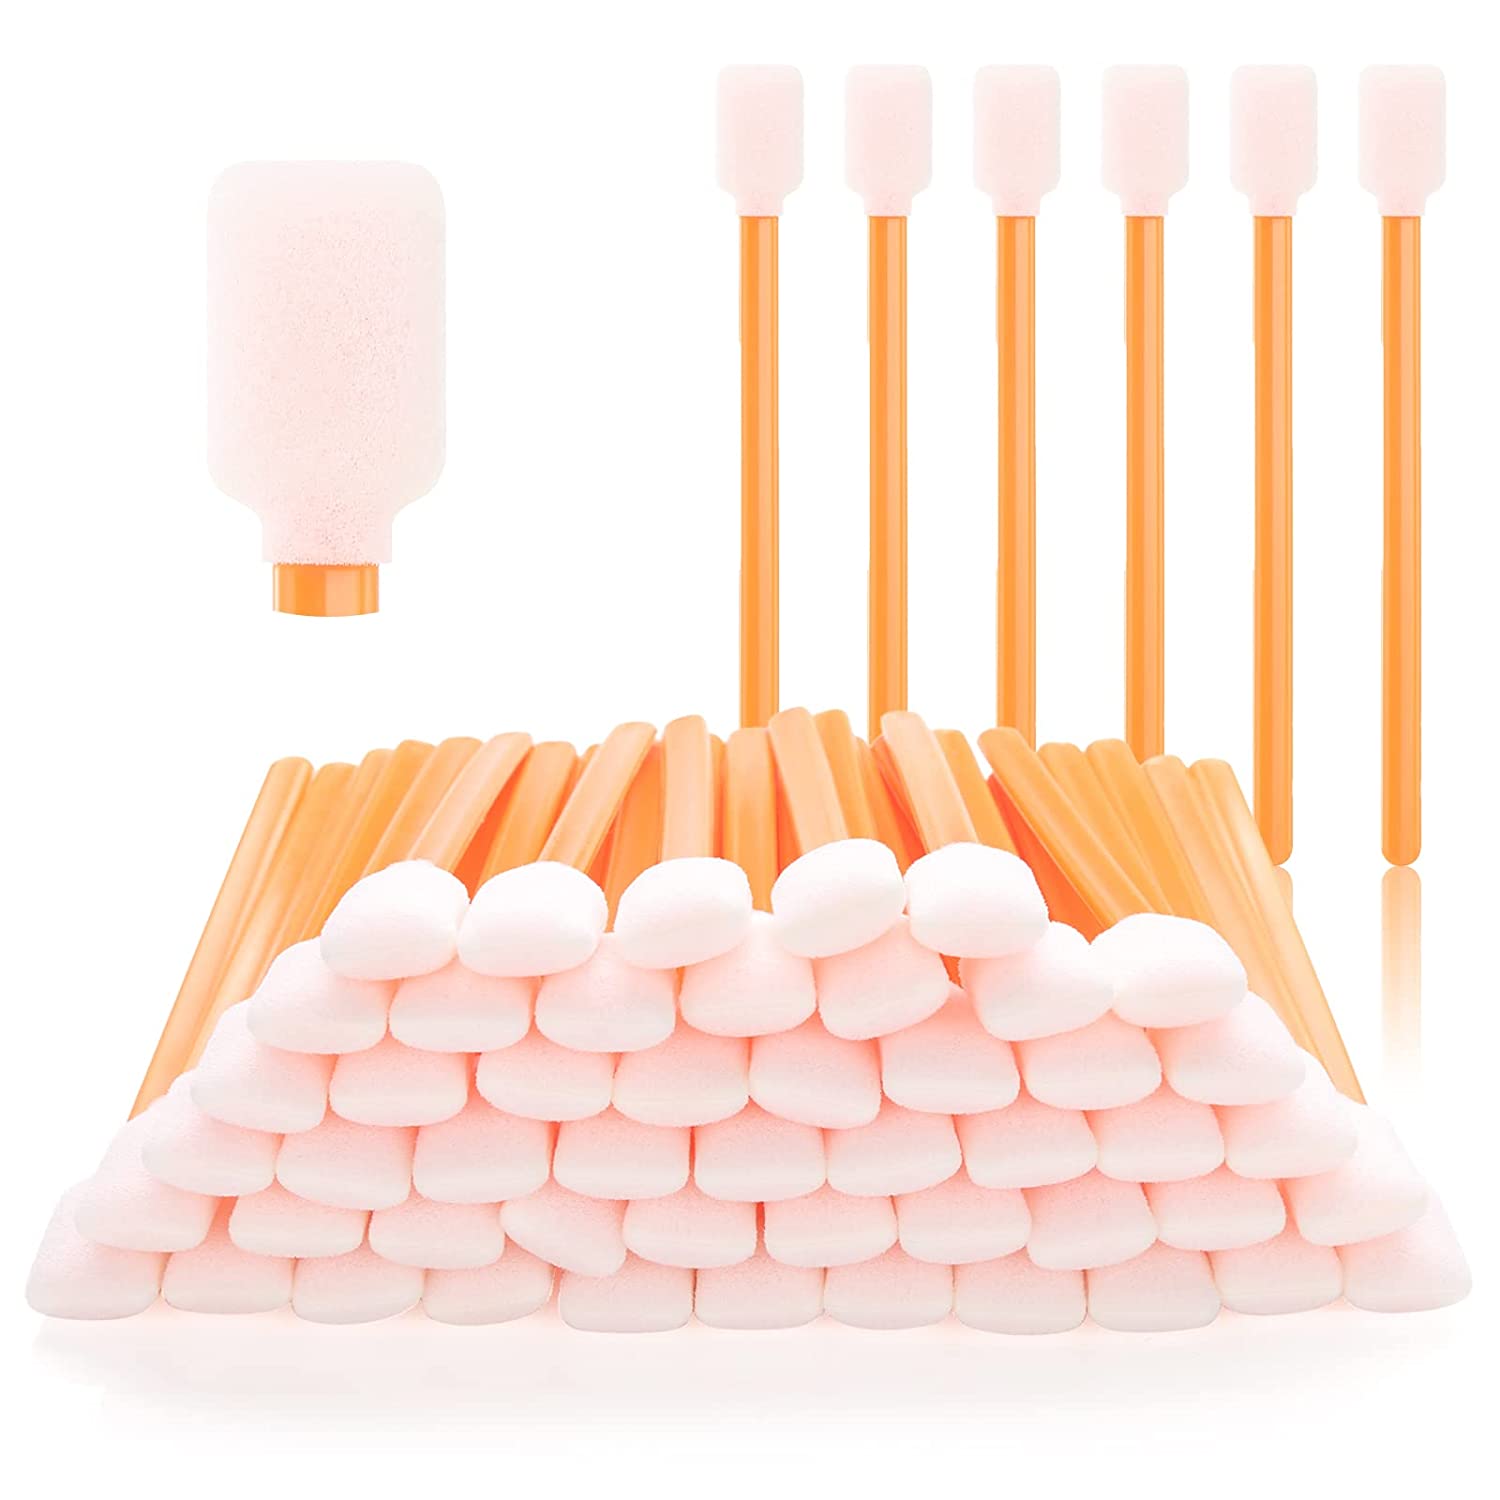 Clarisse Value Size Plastic Sticks Soft and Hygienic Cotton Swabs 375 ea, Cotton Balls & Swabs